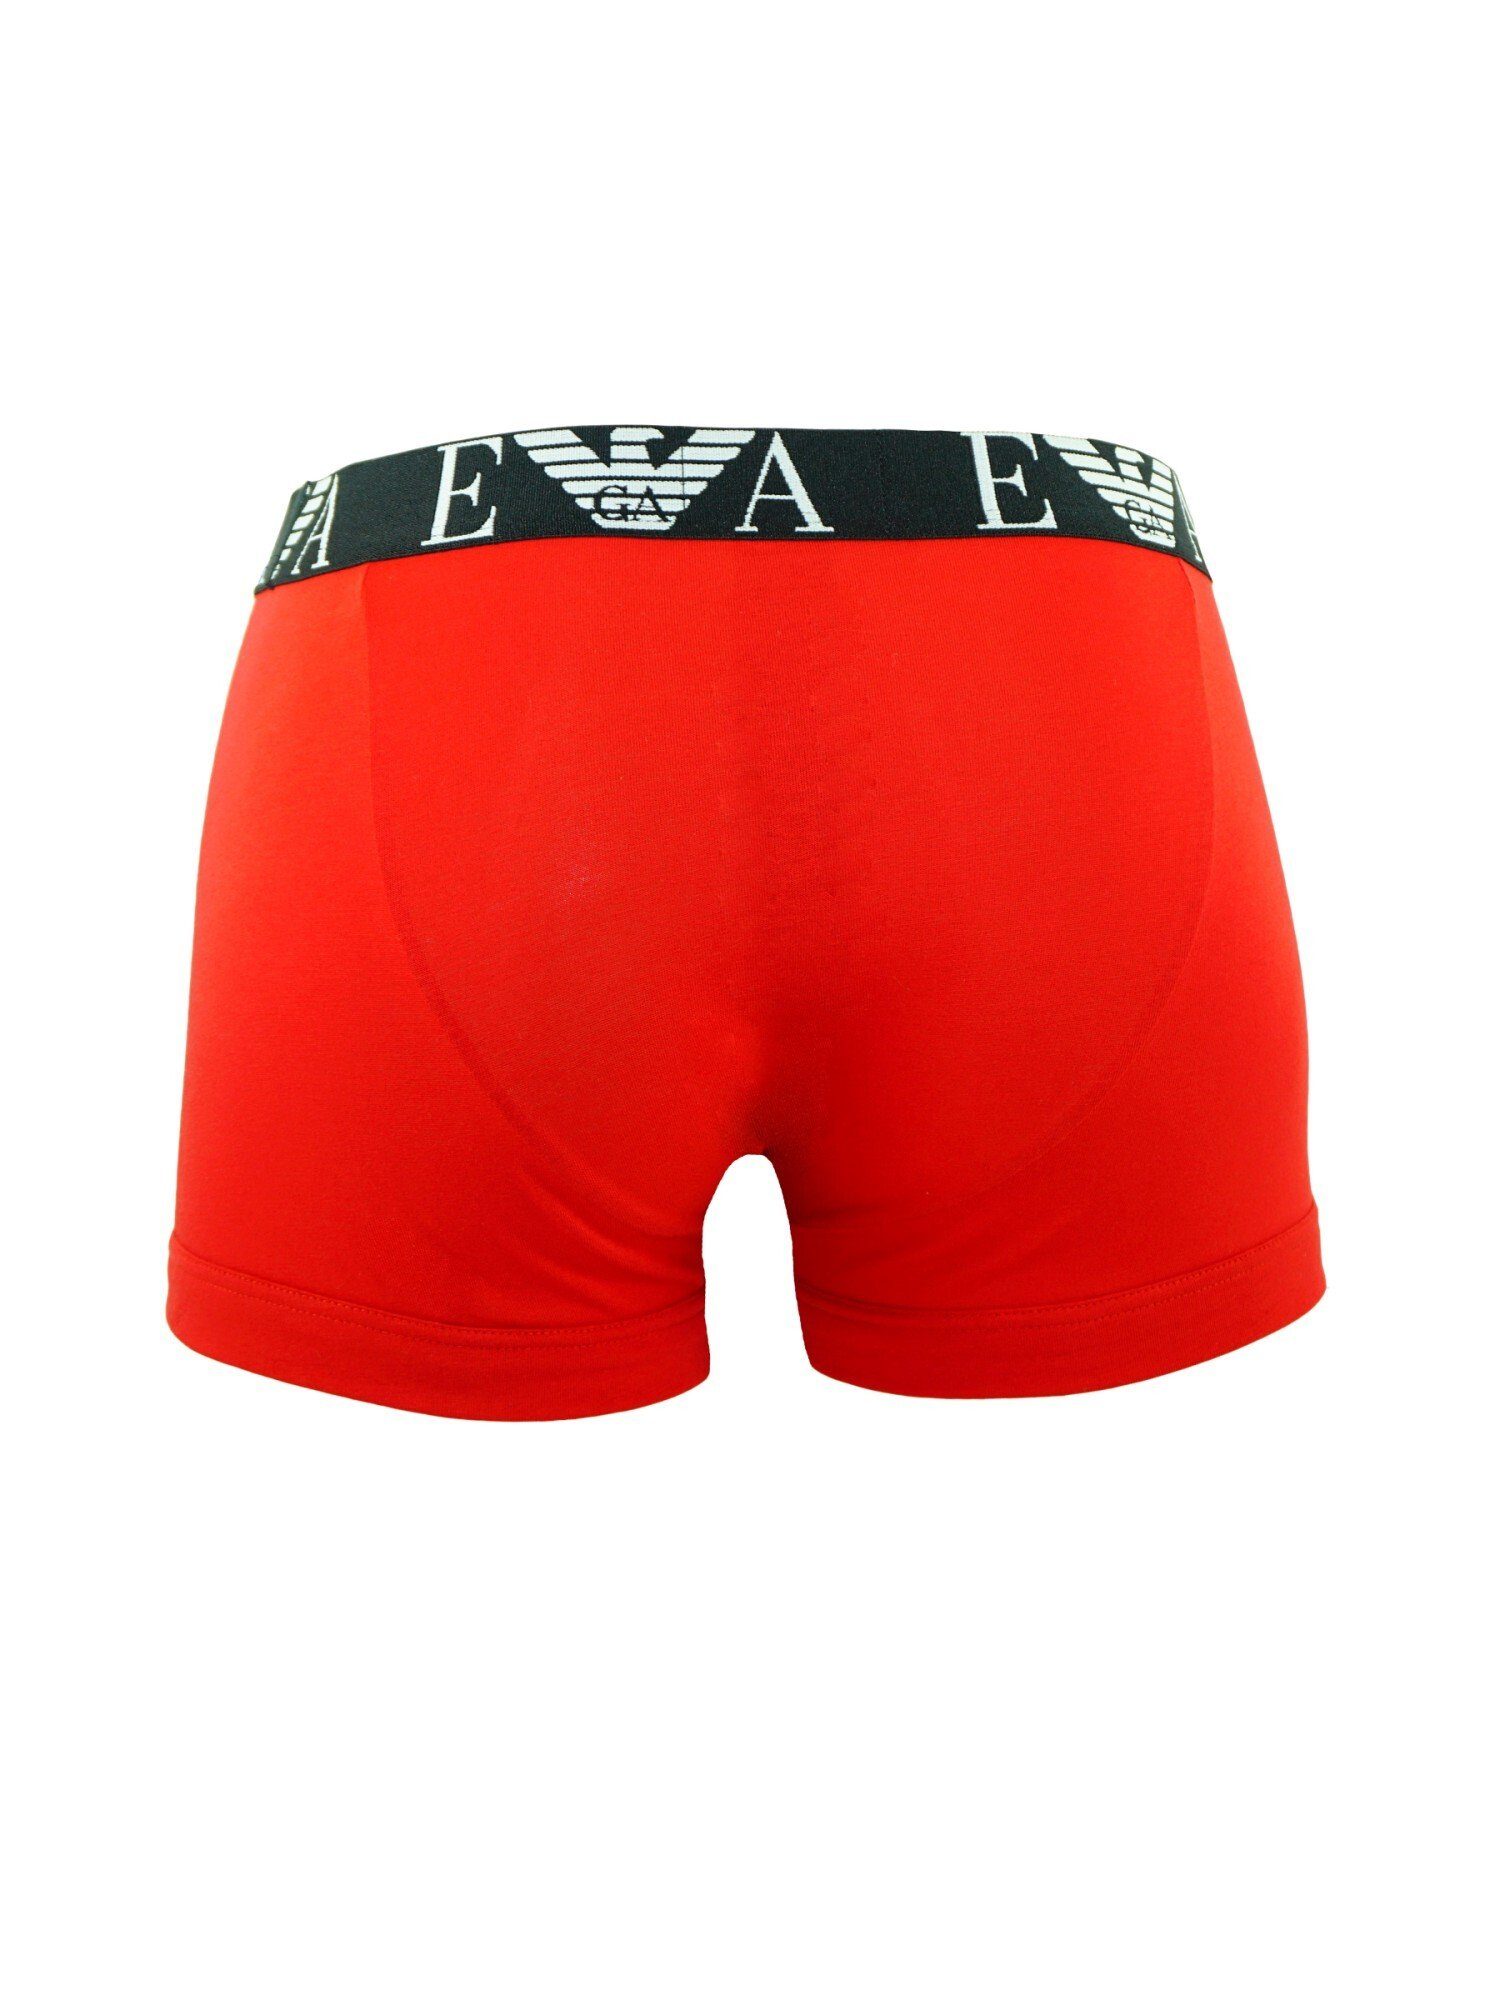 Rot/Grau/Schwarz Knit Armani Trunks Shorts 3 Boxershorts (3-St) Pack Emporio